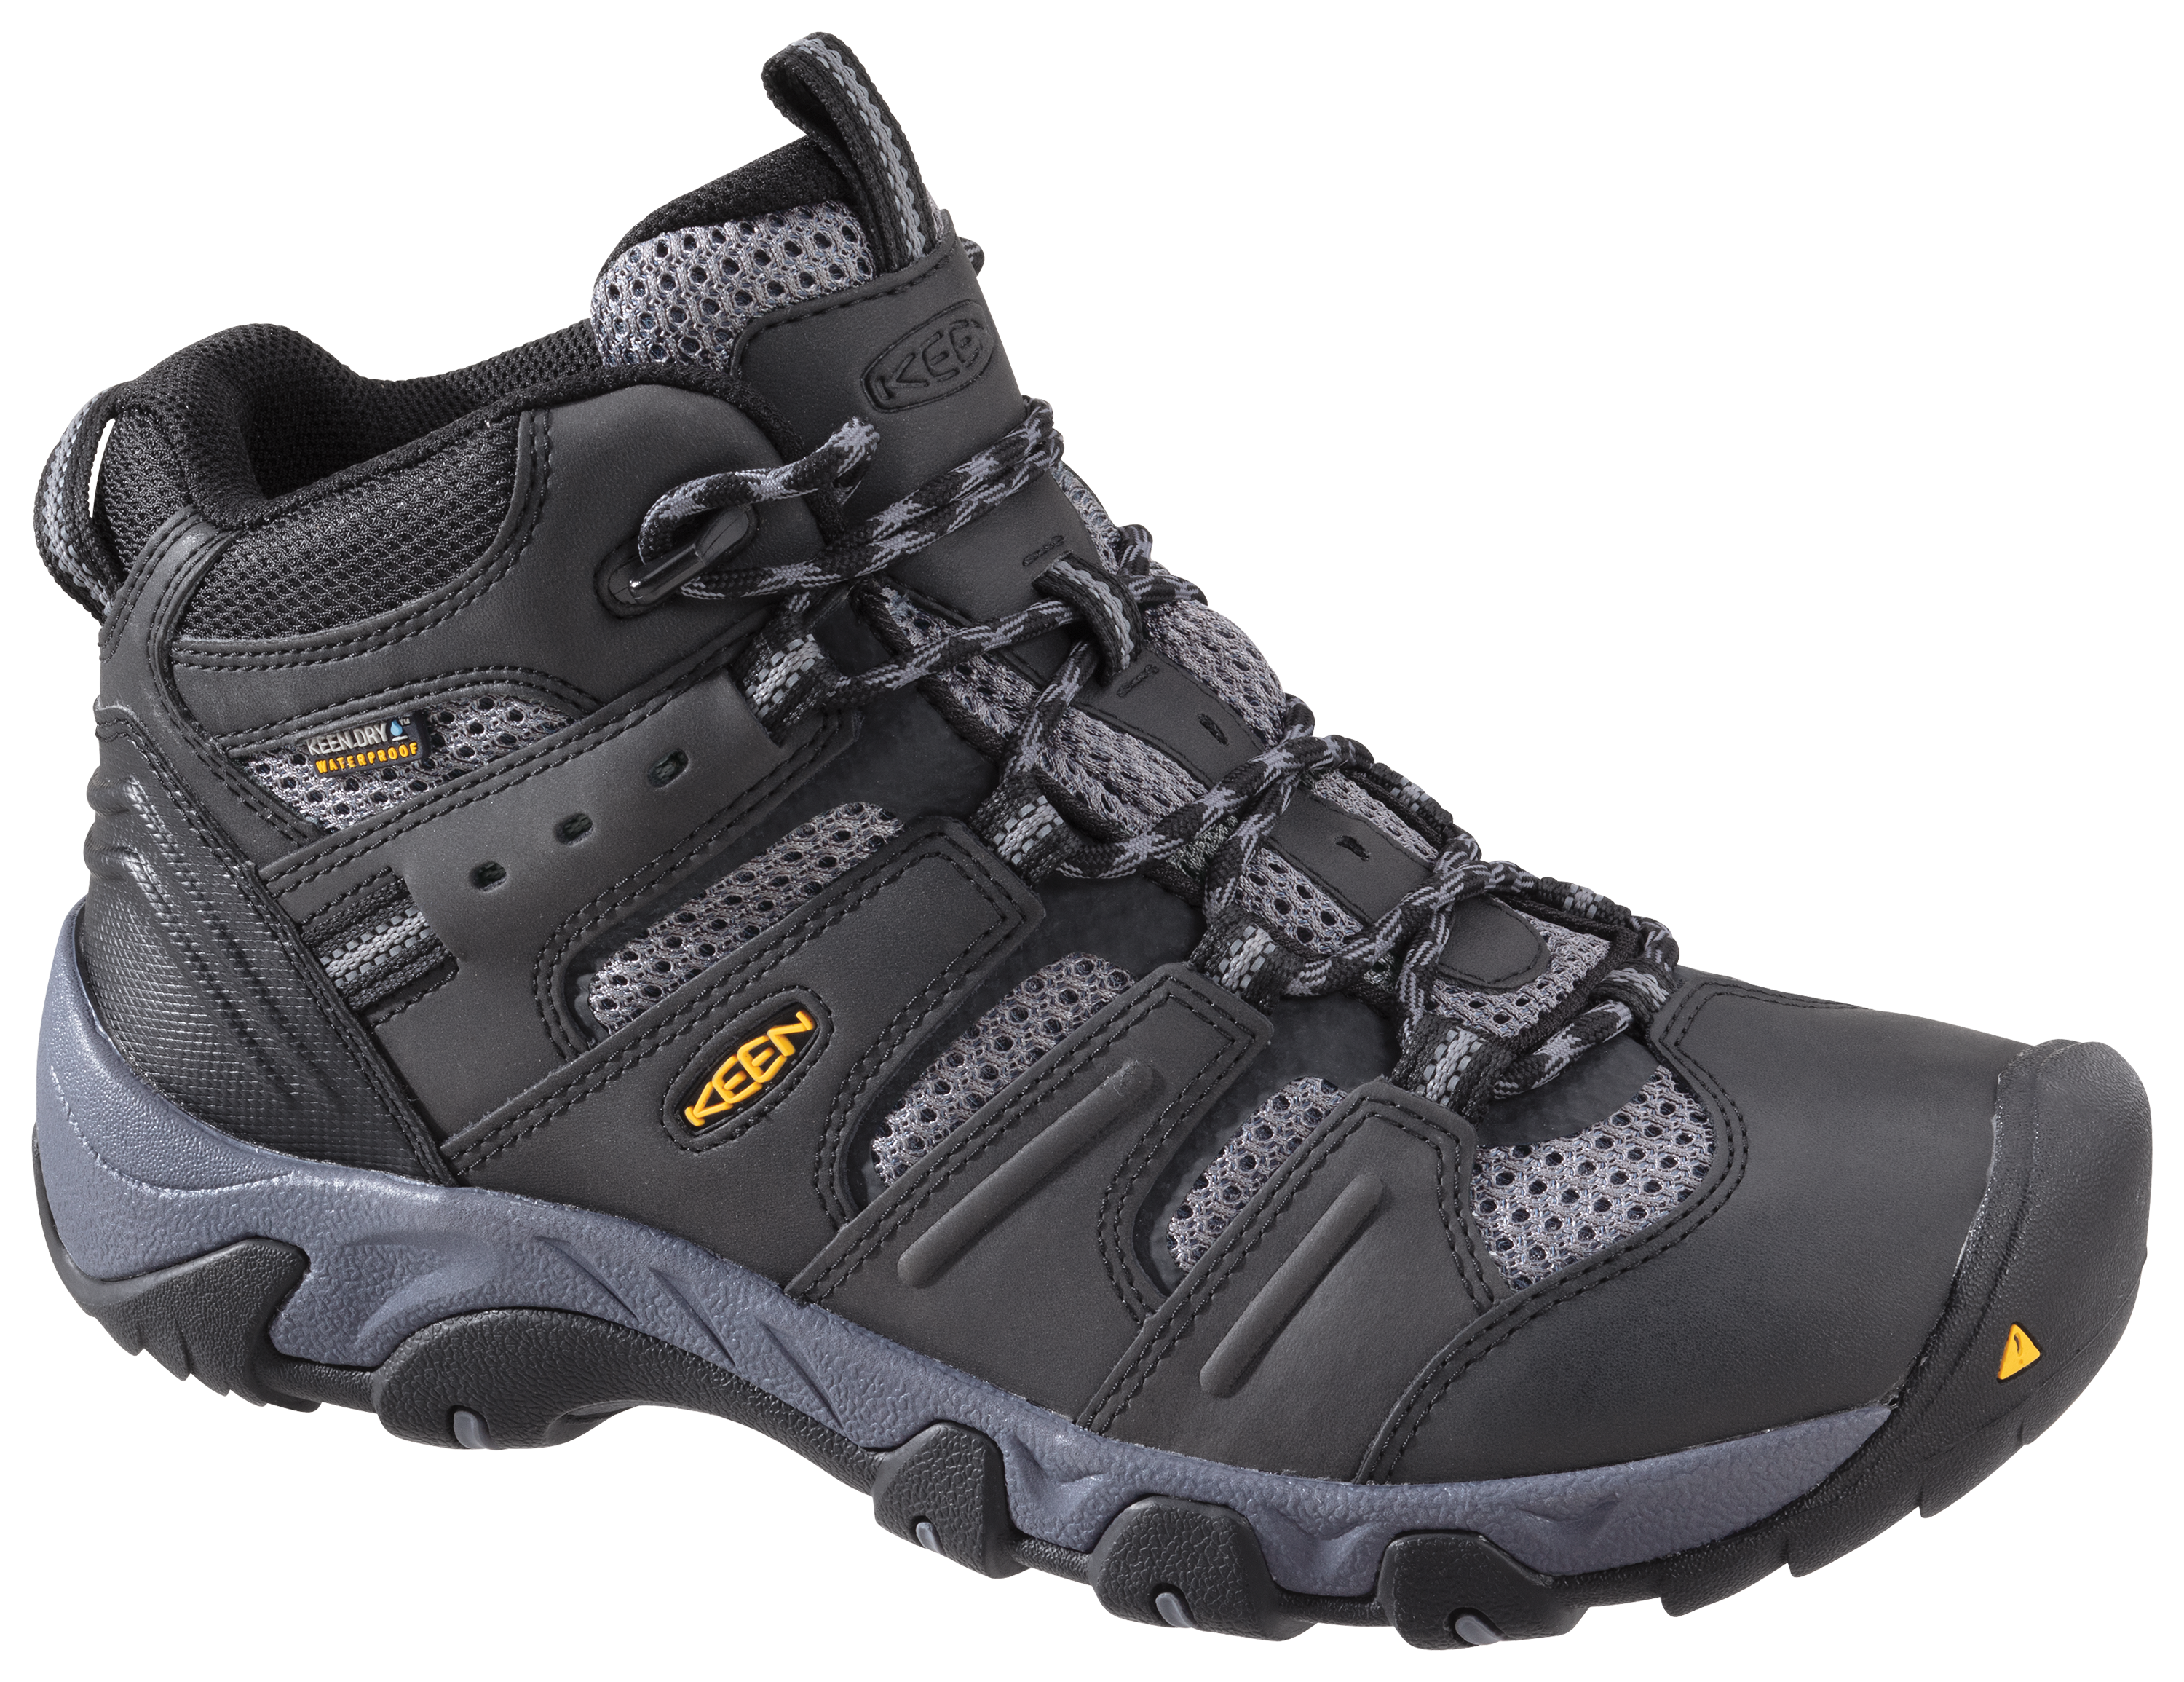 KEEN Koven Mid Waterproof Hiking Boots for Men - Black/Gray - 10.5M